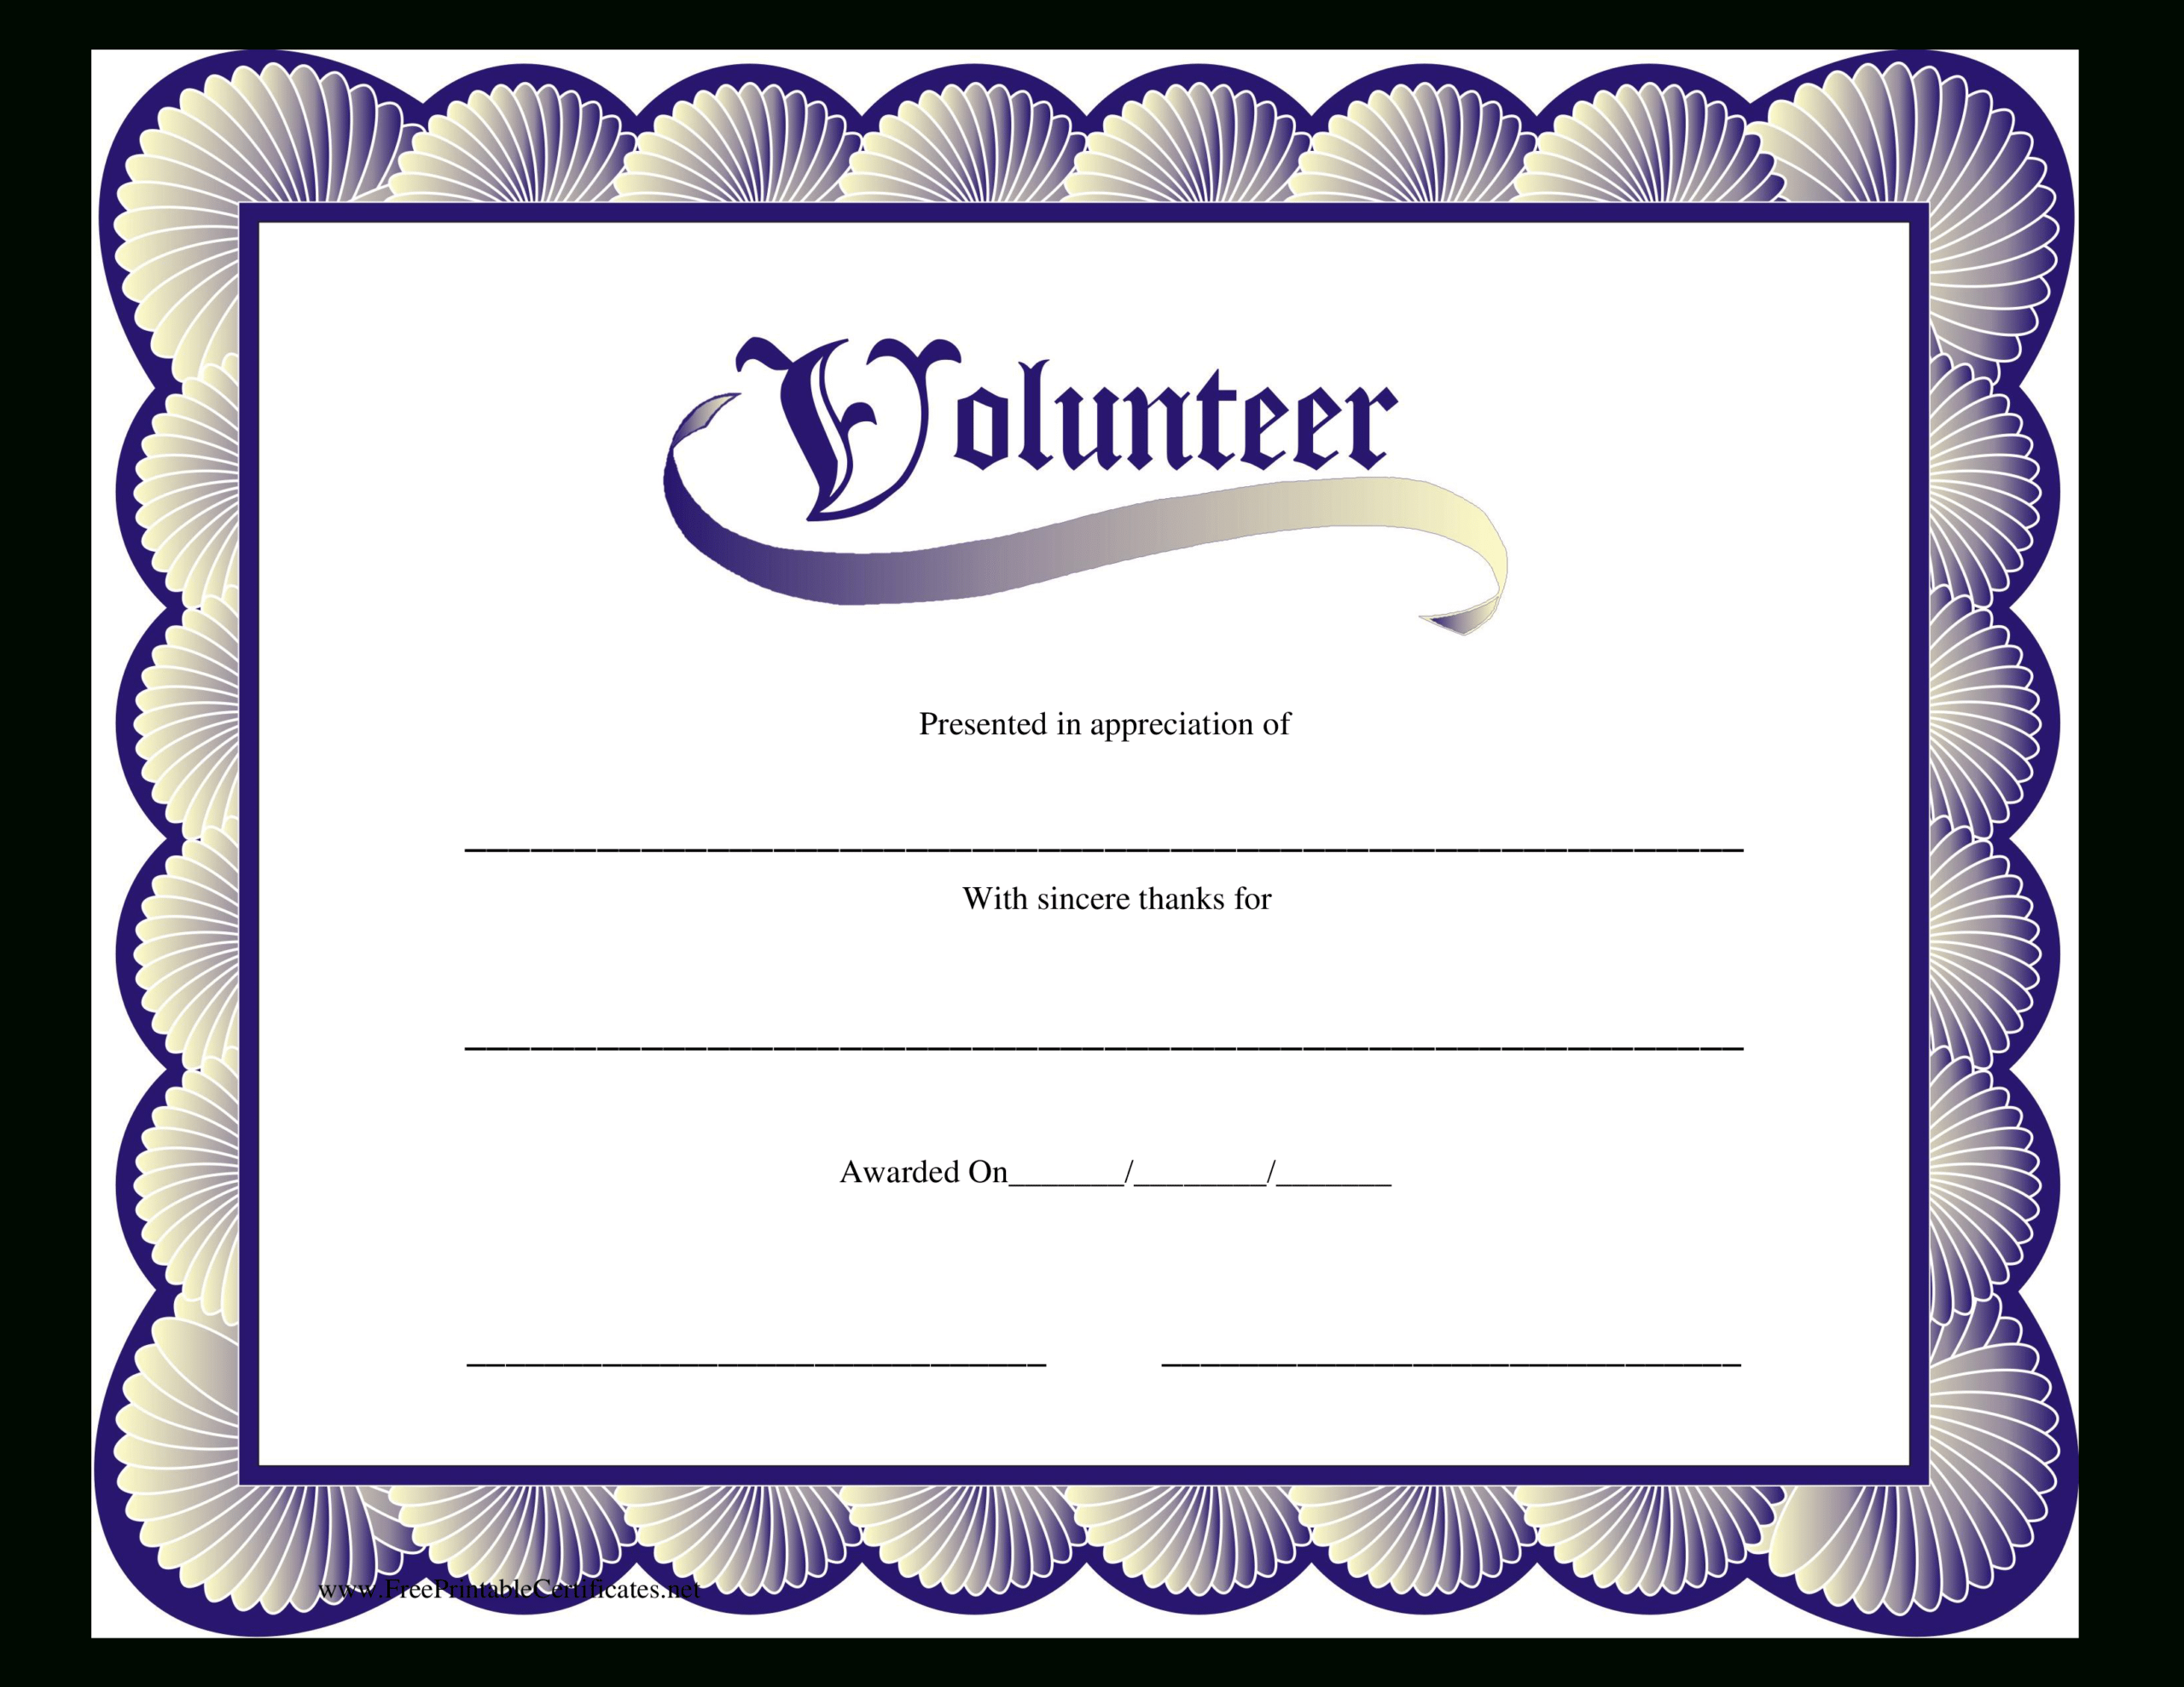 Volunteer Certificate | Templates At Allbusinesstemplates Pertaining To Volunteer Award Certificate Template